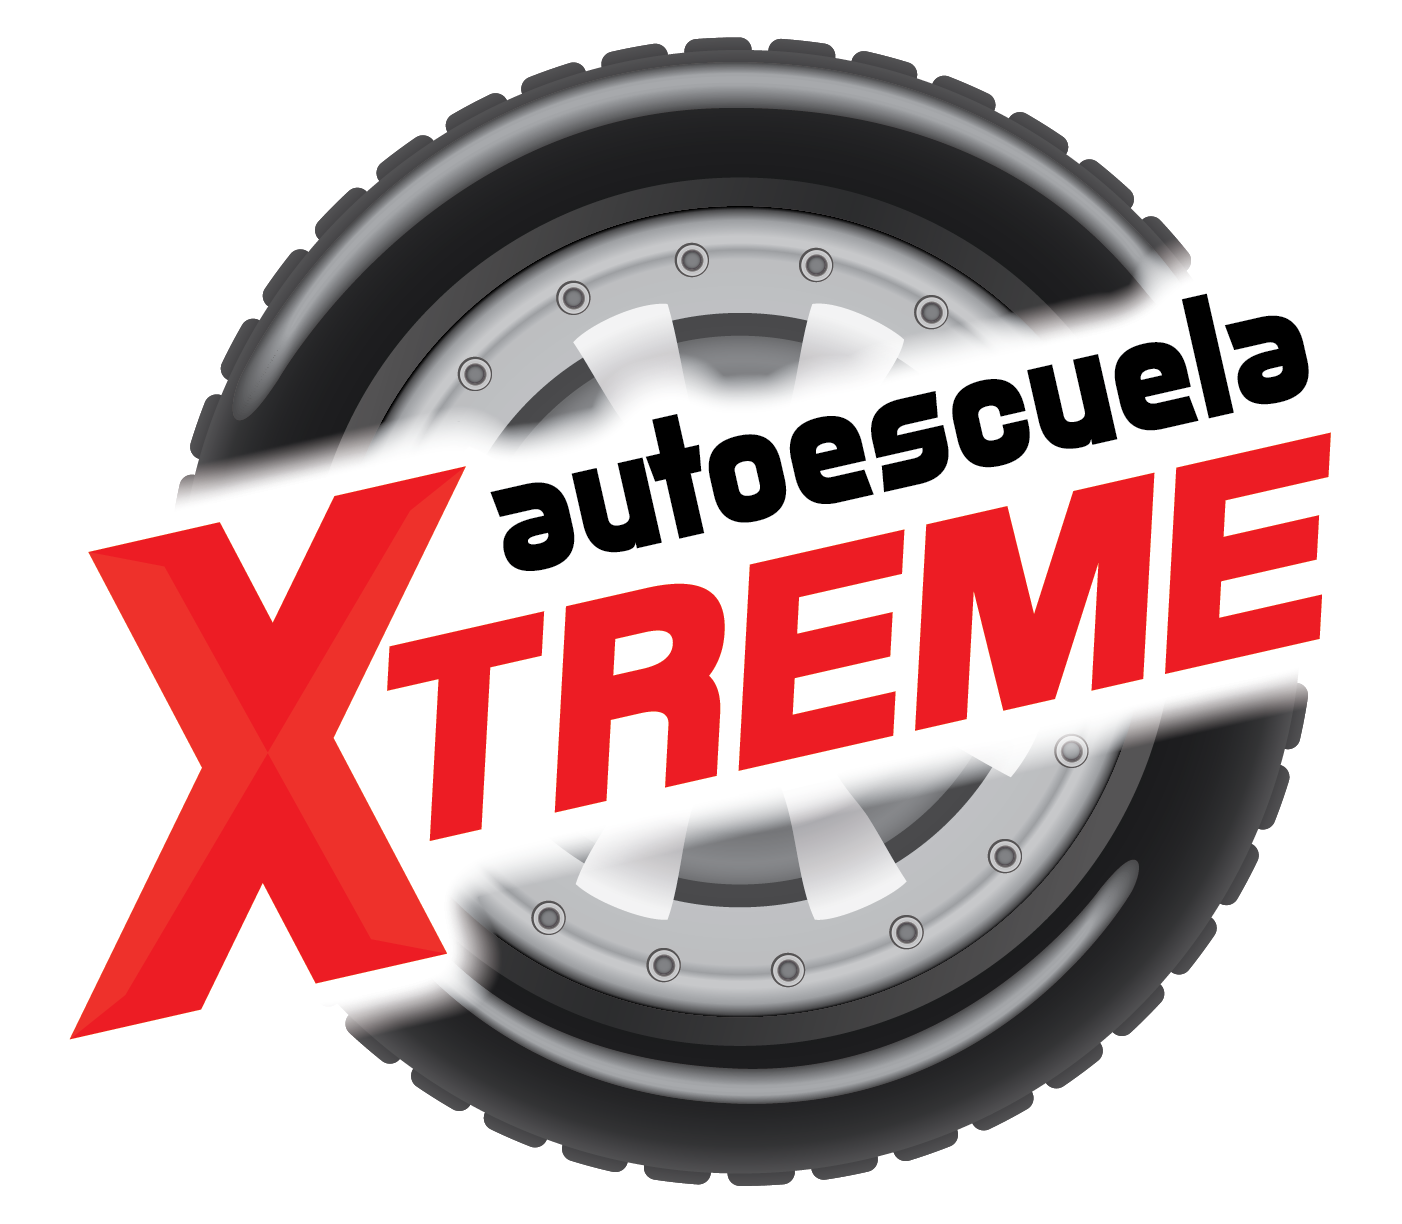 Autoescuela Xtreme - Madrid